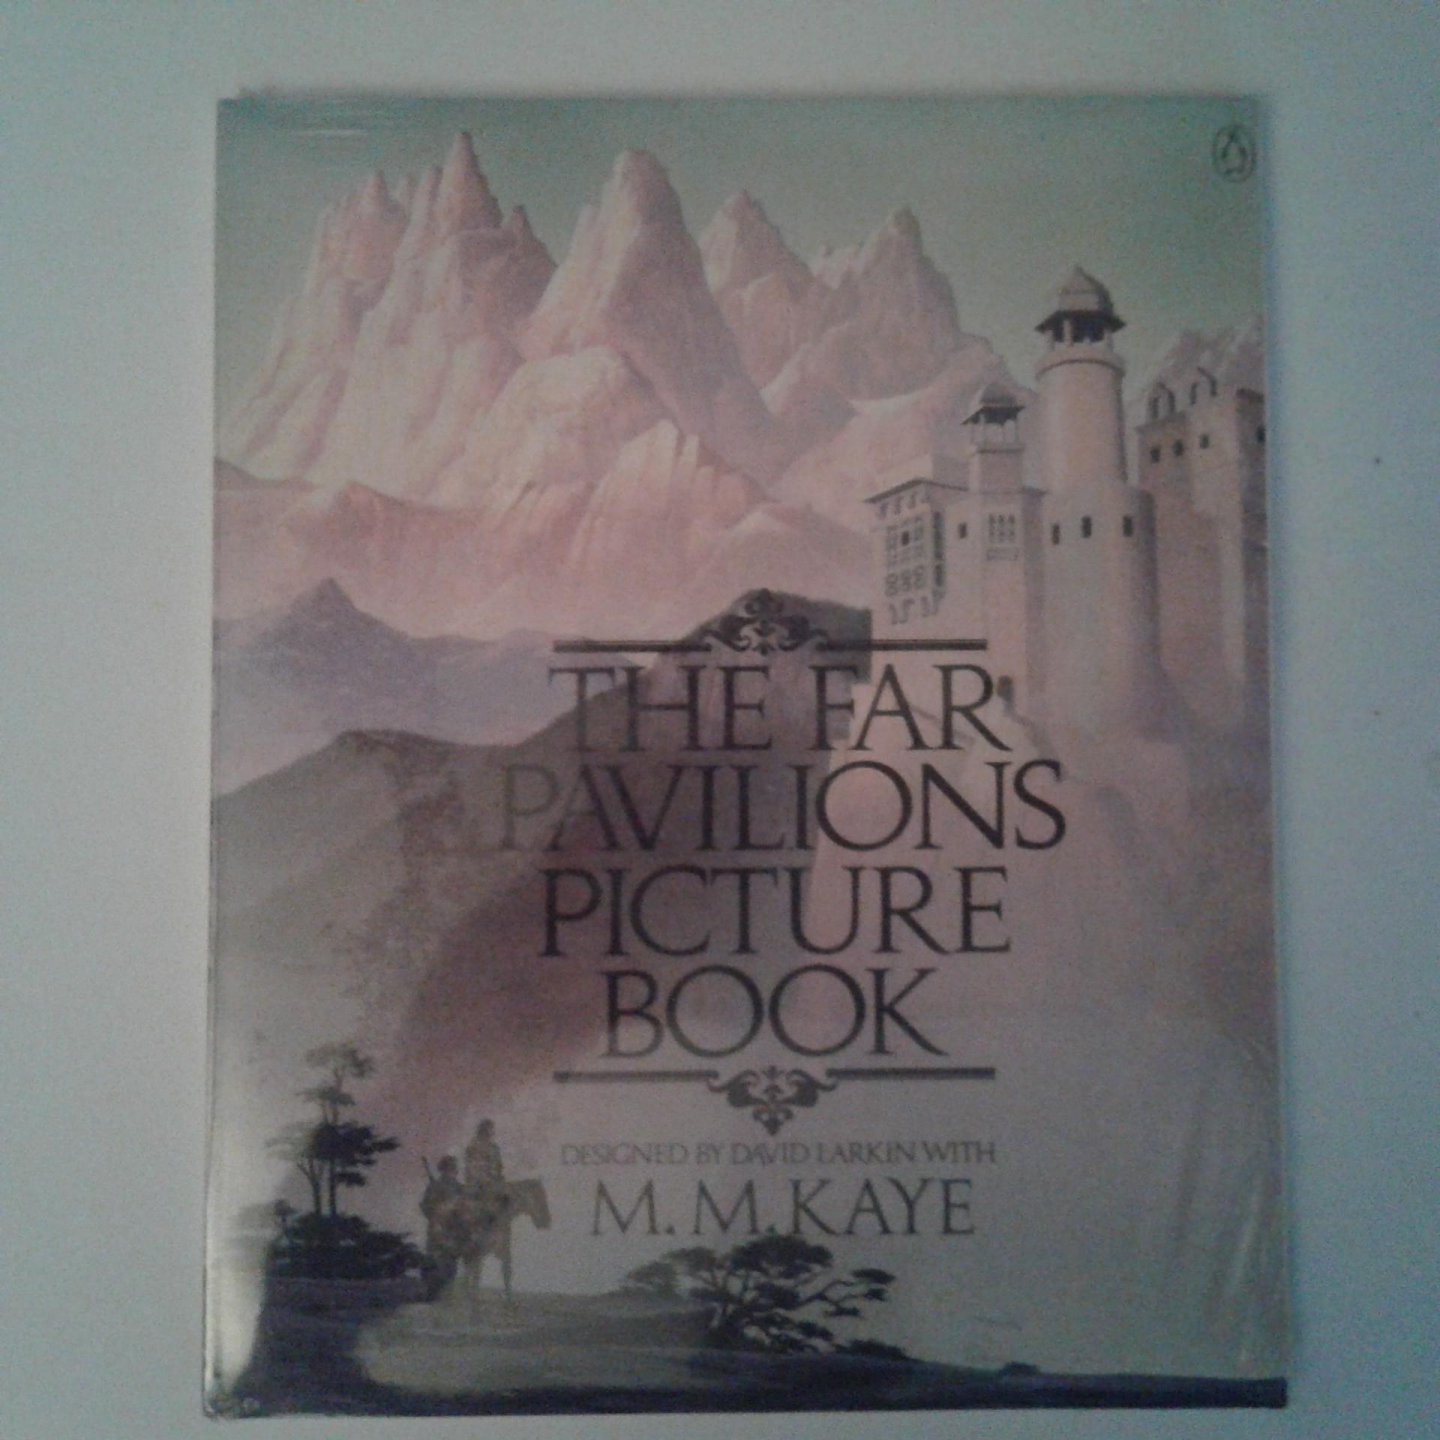 Kaye, M.M. ; Larkin, David - The Far Pavilions Picture Book